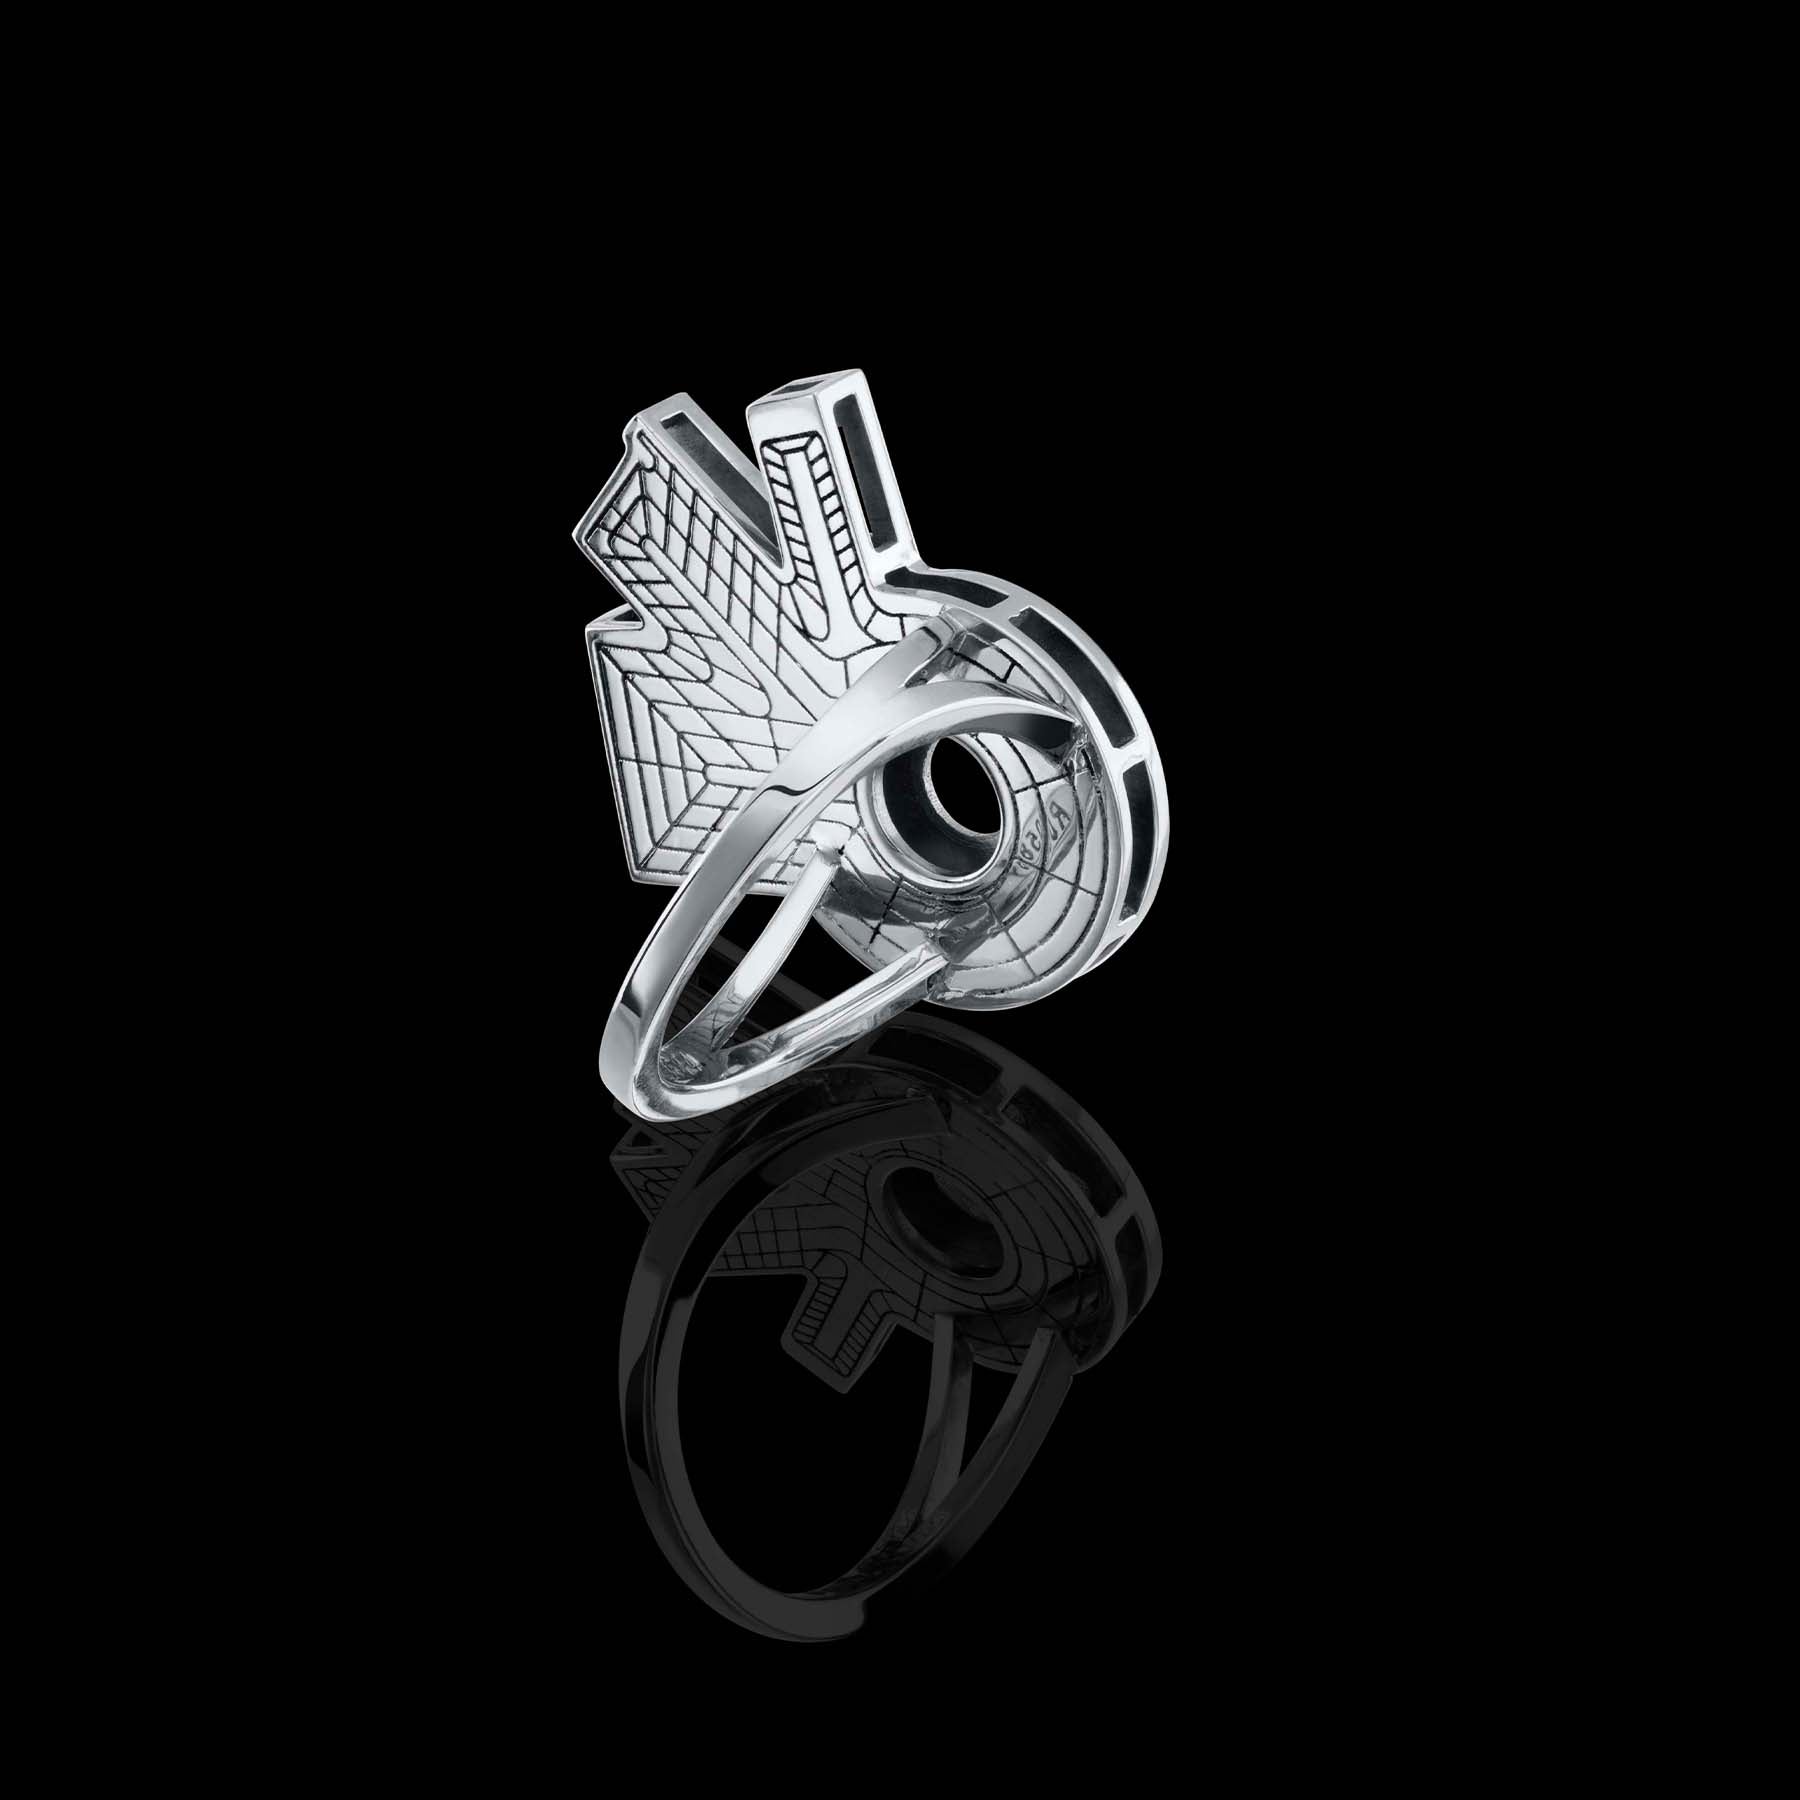 Benfey Ring by designer Solange Azagury-Partridge - 18 carat white gold and diamonds - Back vertical